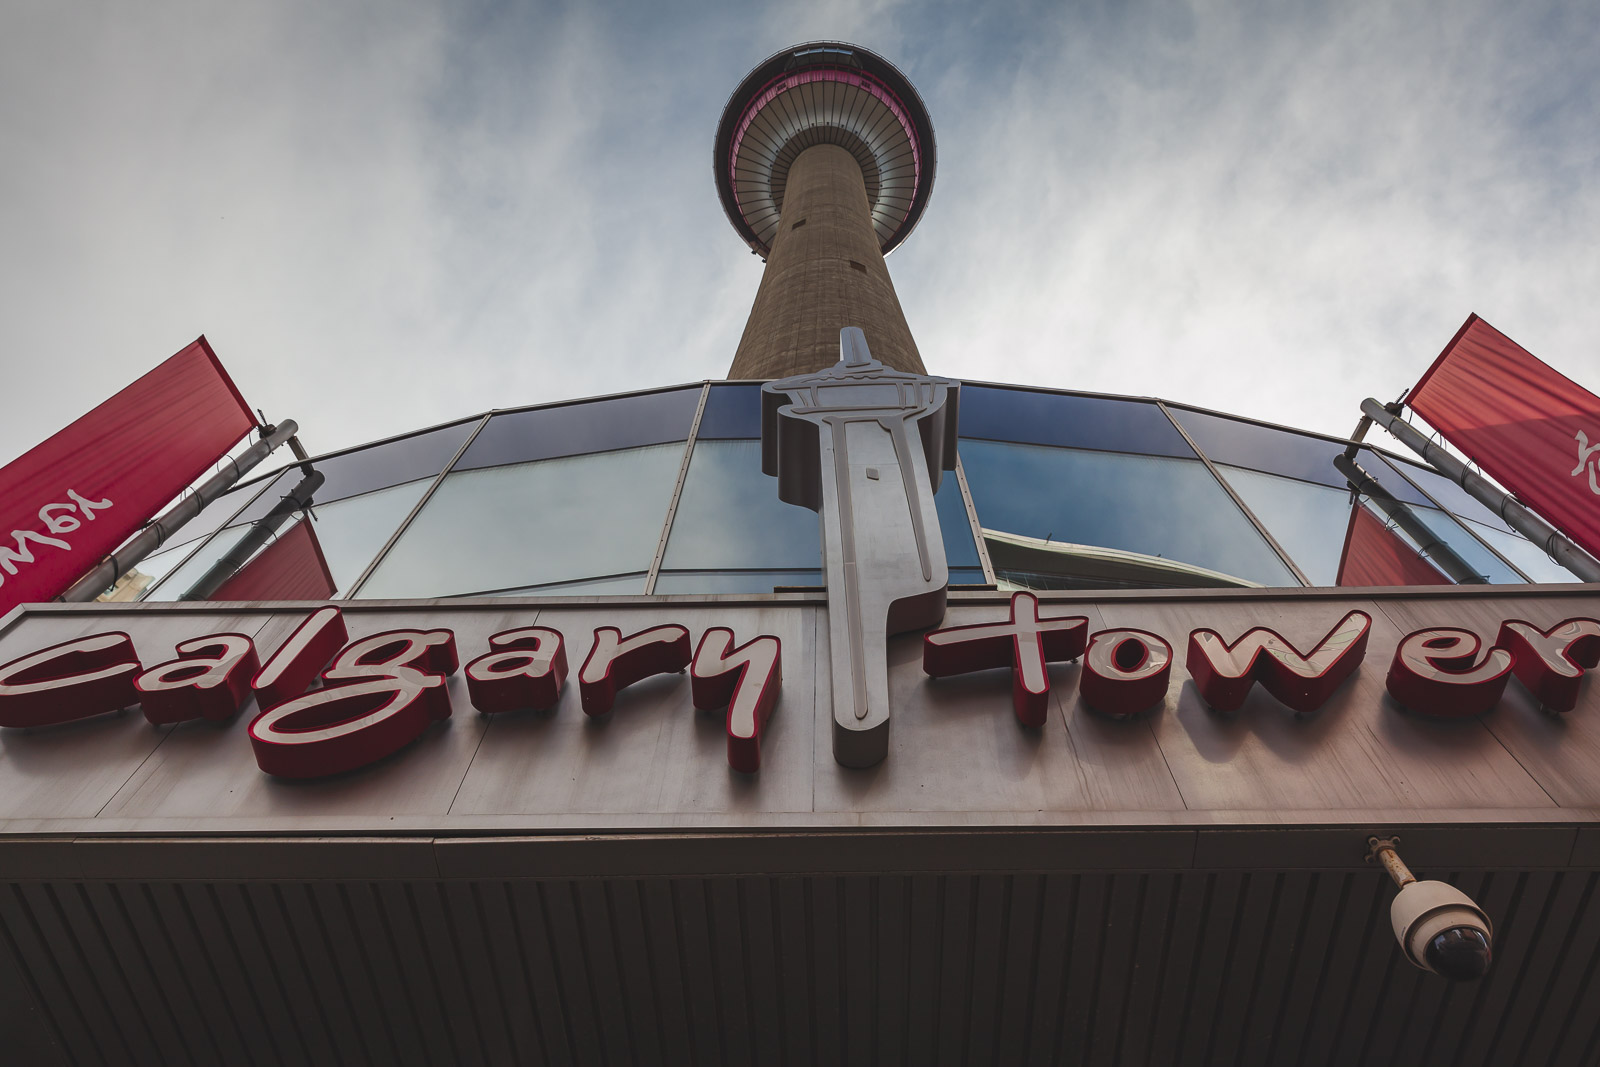 things to do in Calgary - calgary Tower Alberta